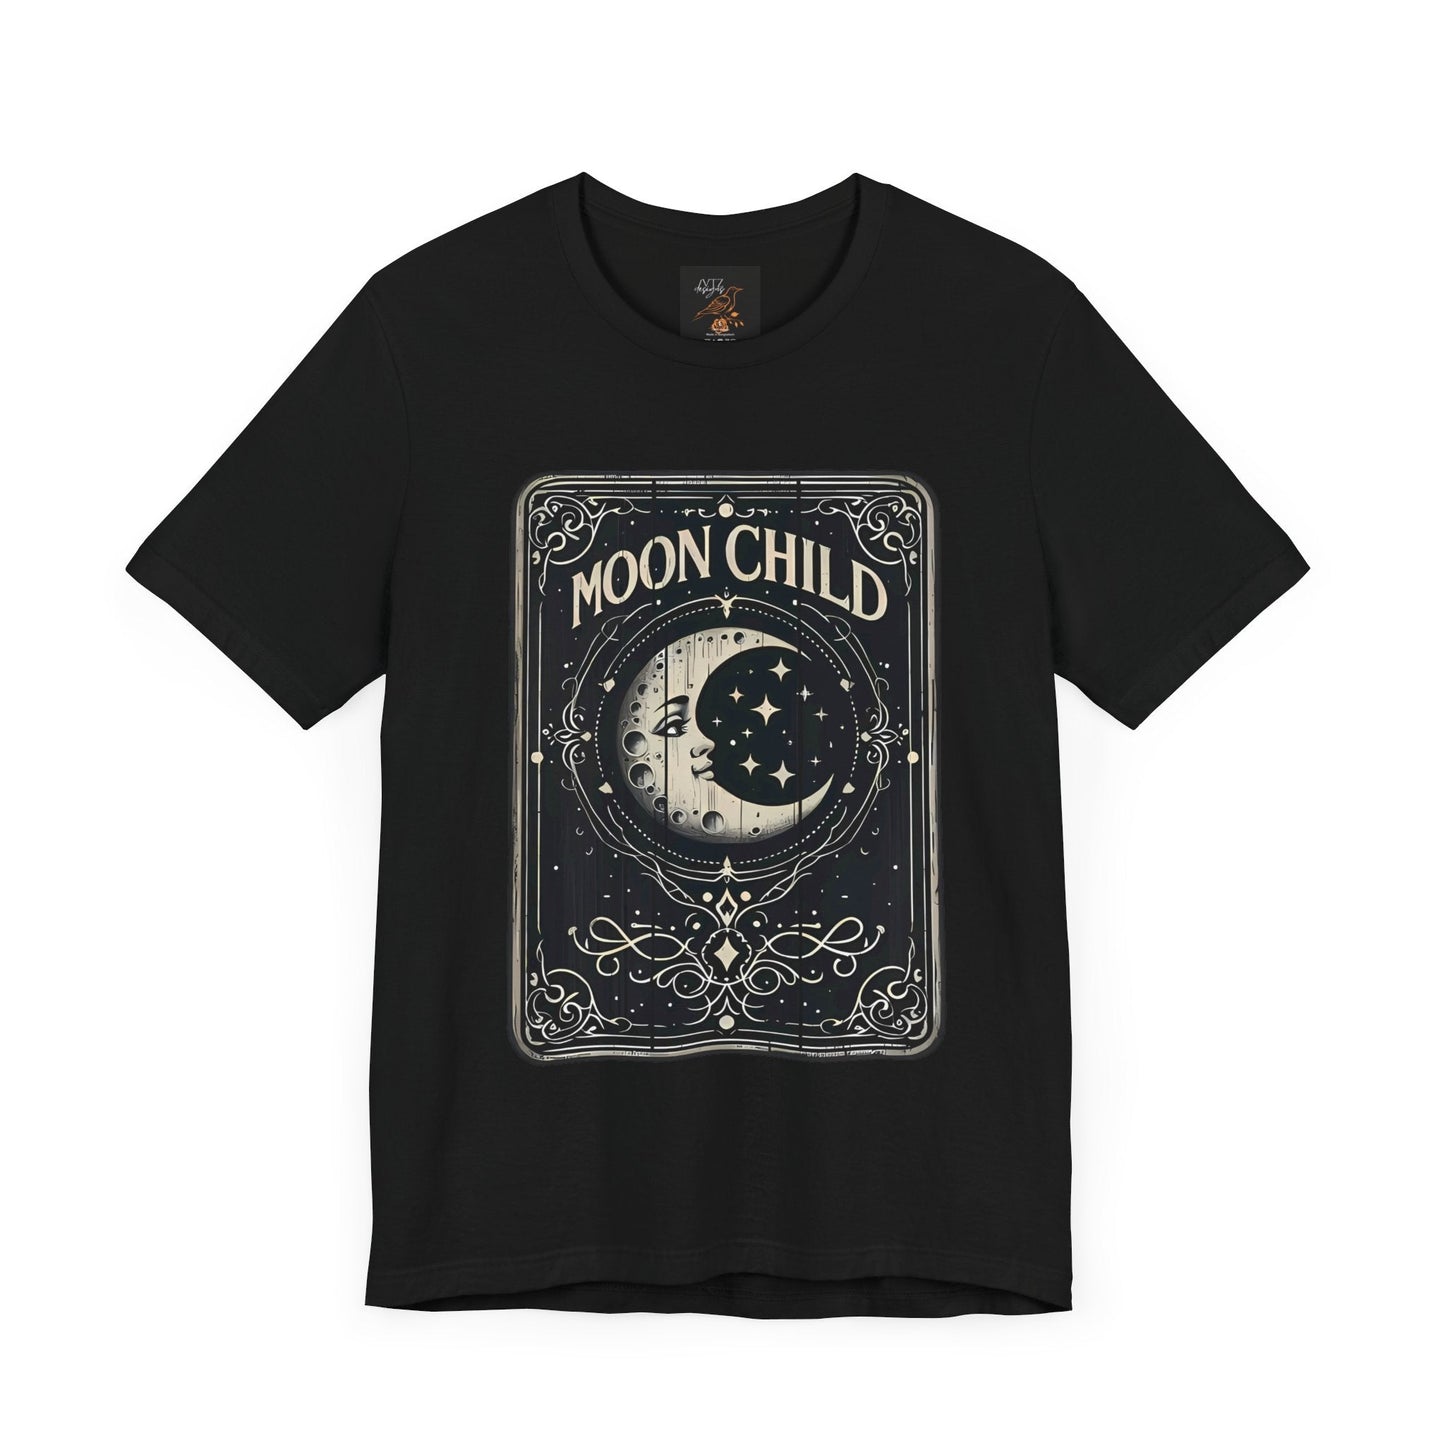 Moon Child Tee ShirtT - ShirtVTZdesignsBlackXSCottonCrew neckDTG